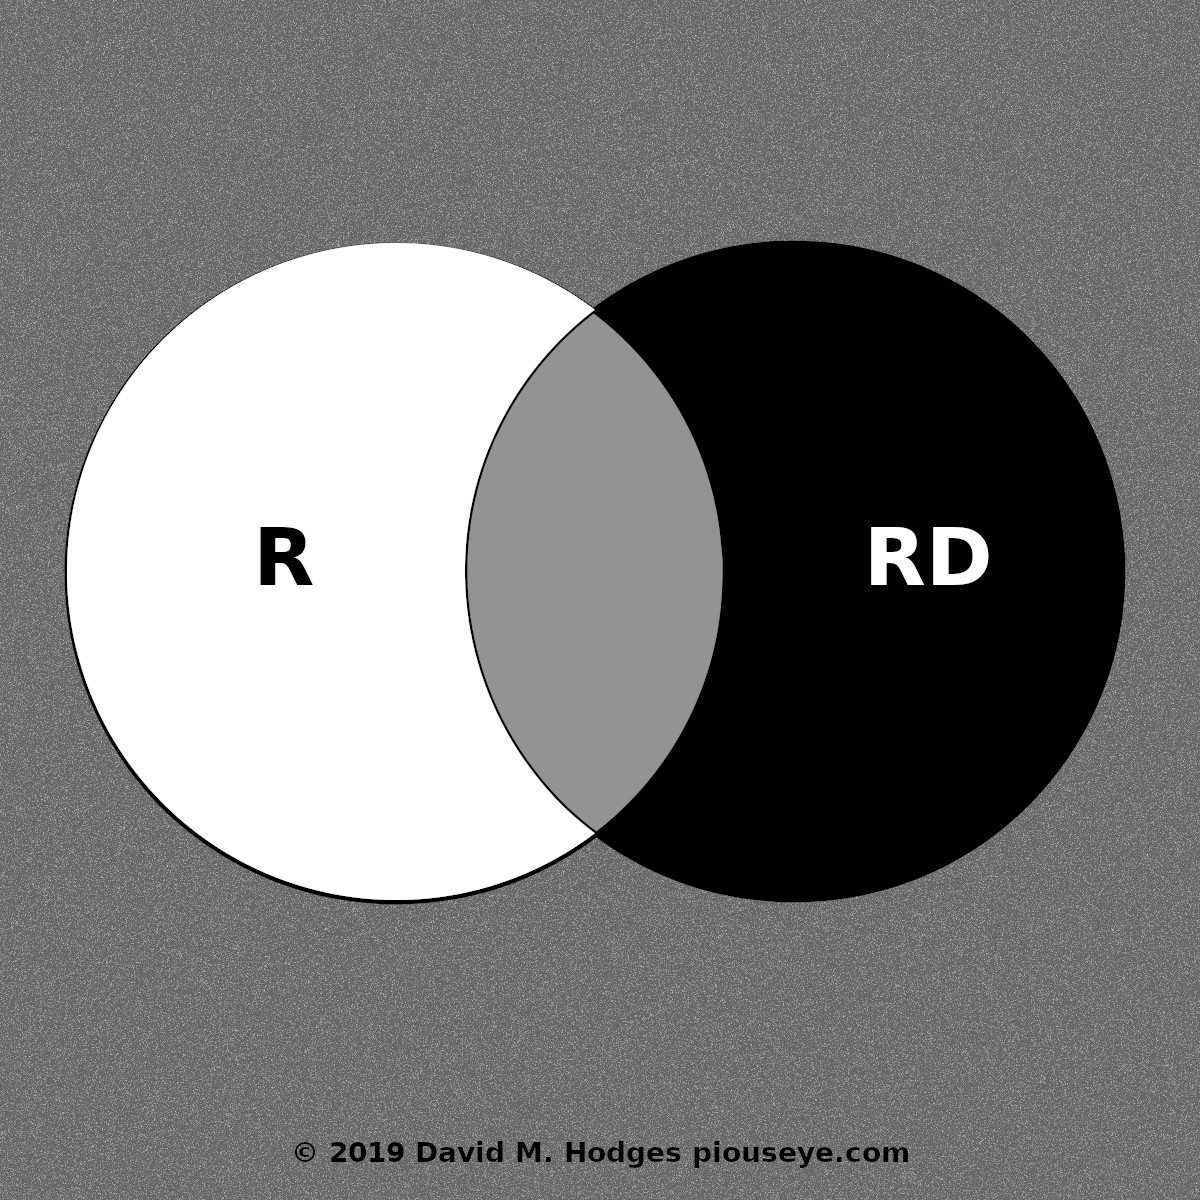 Venn diagram of sets R and RD